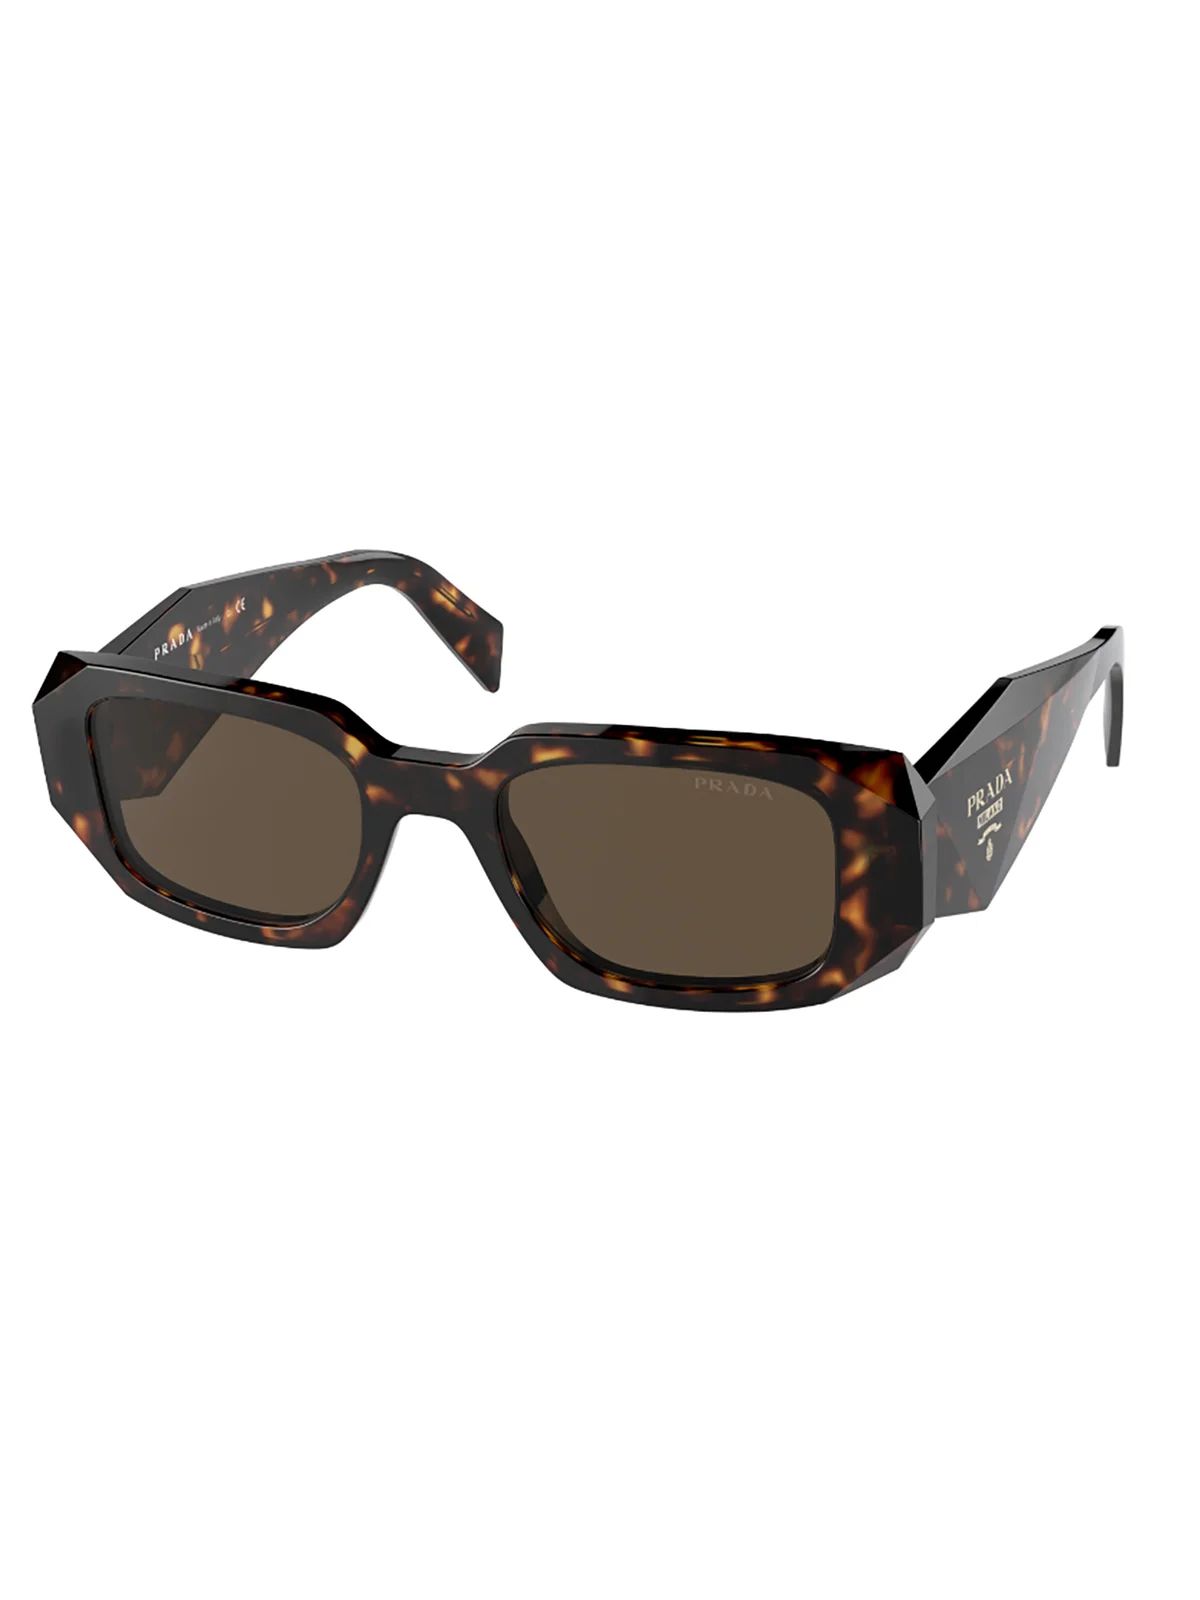 Prada Eyewear Rectangular Frame Sunglasses | Cettire Global